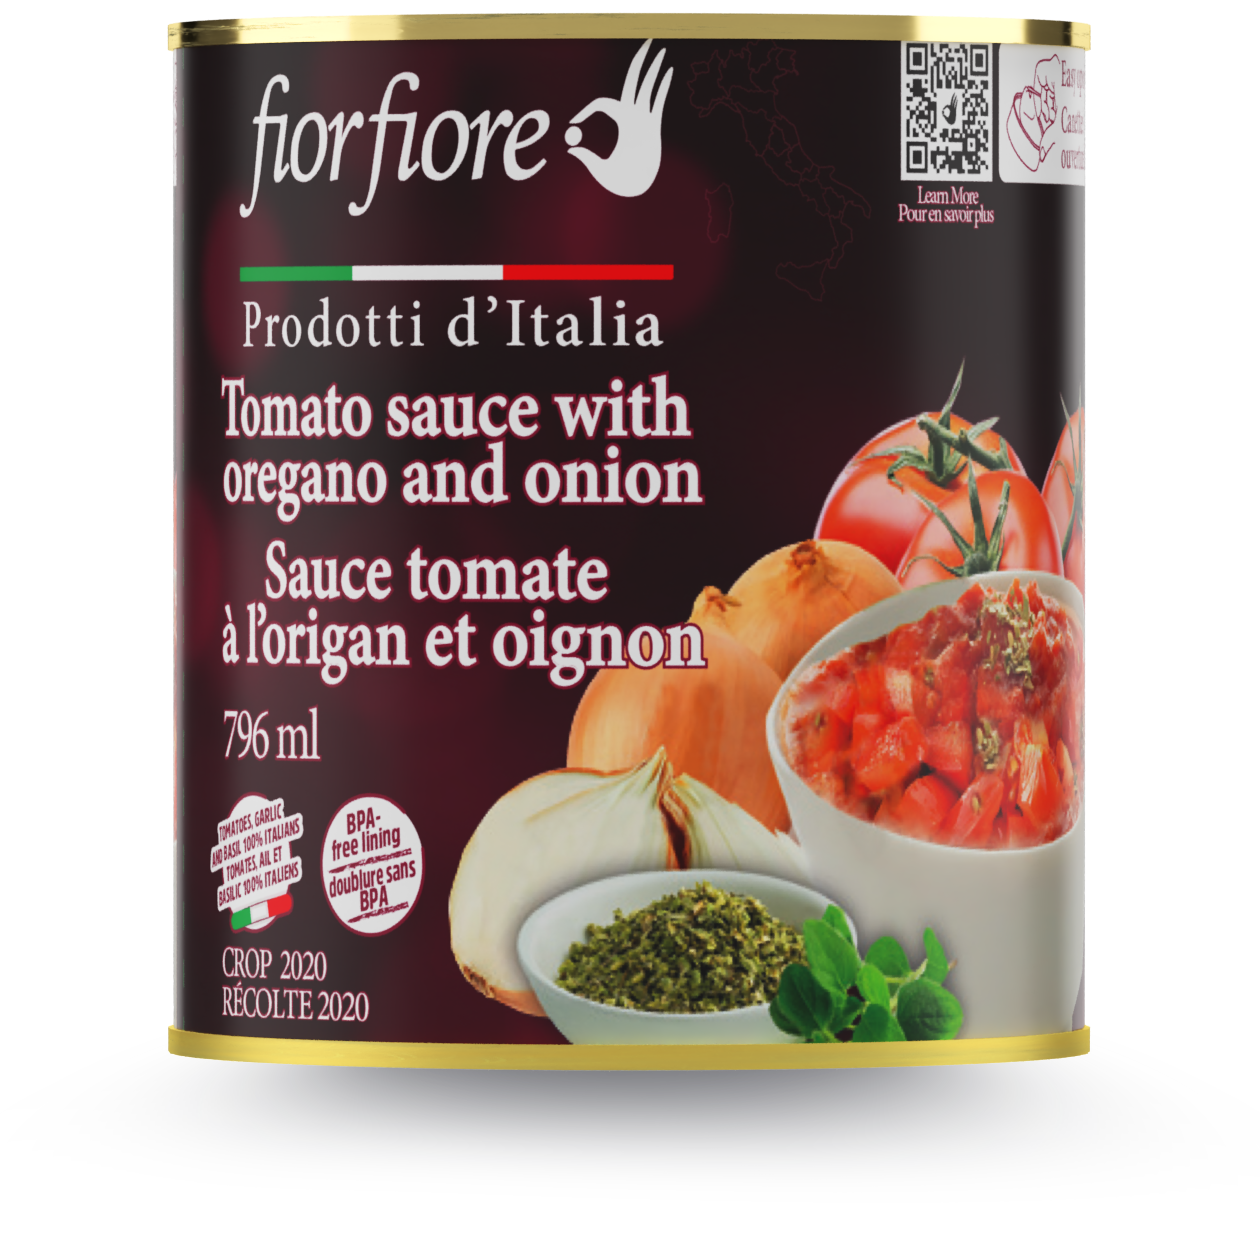 Tomato sauce with oregano and onion